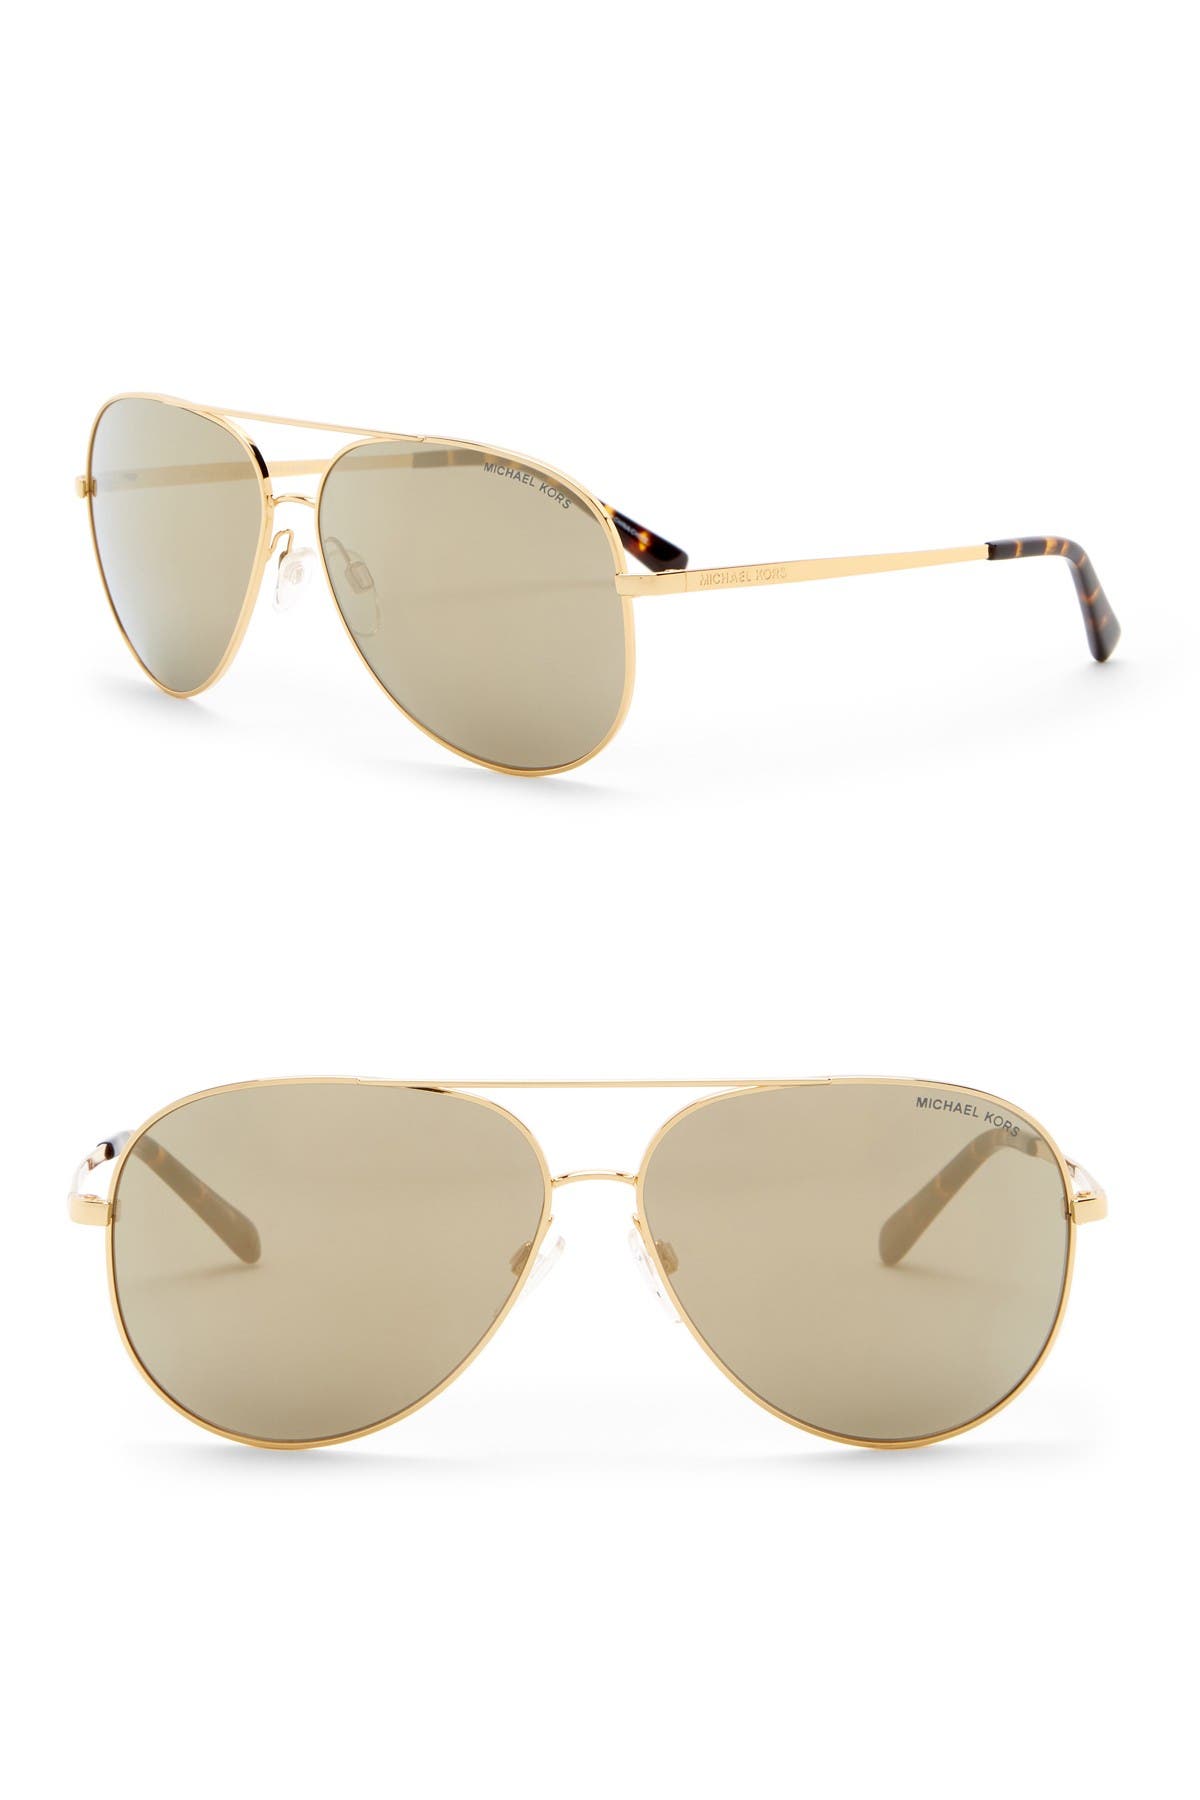 Michael Kors | 60mm Aviator Sunglasses 